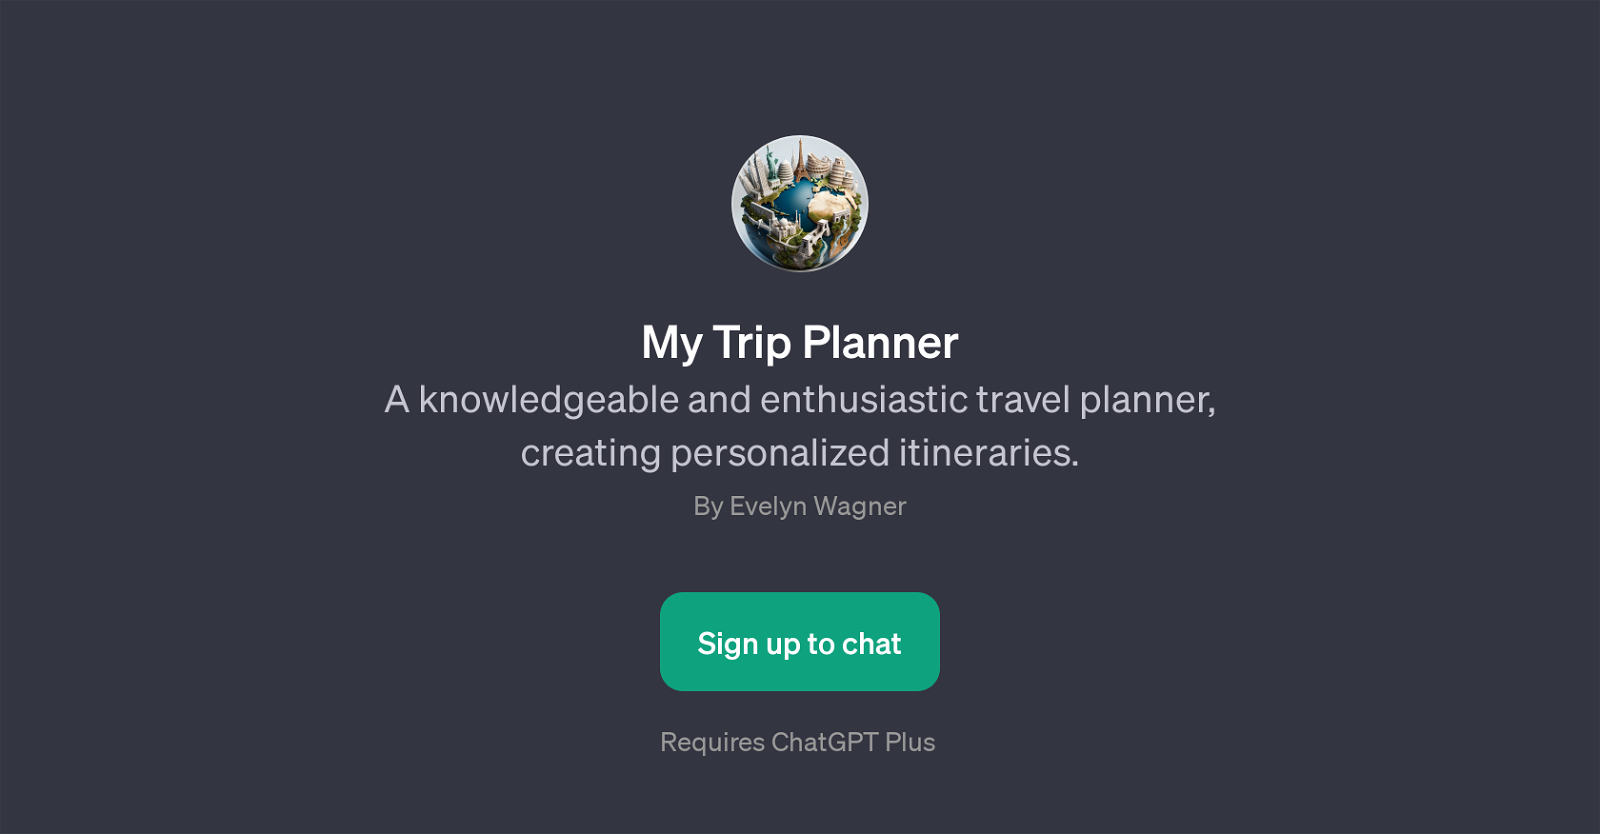 My Trip Planner website